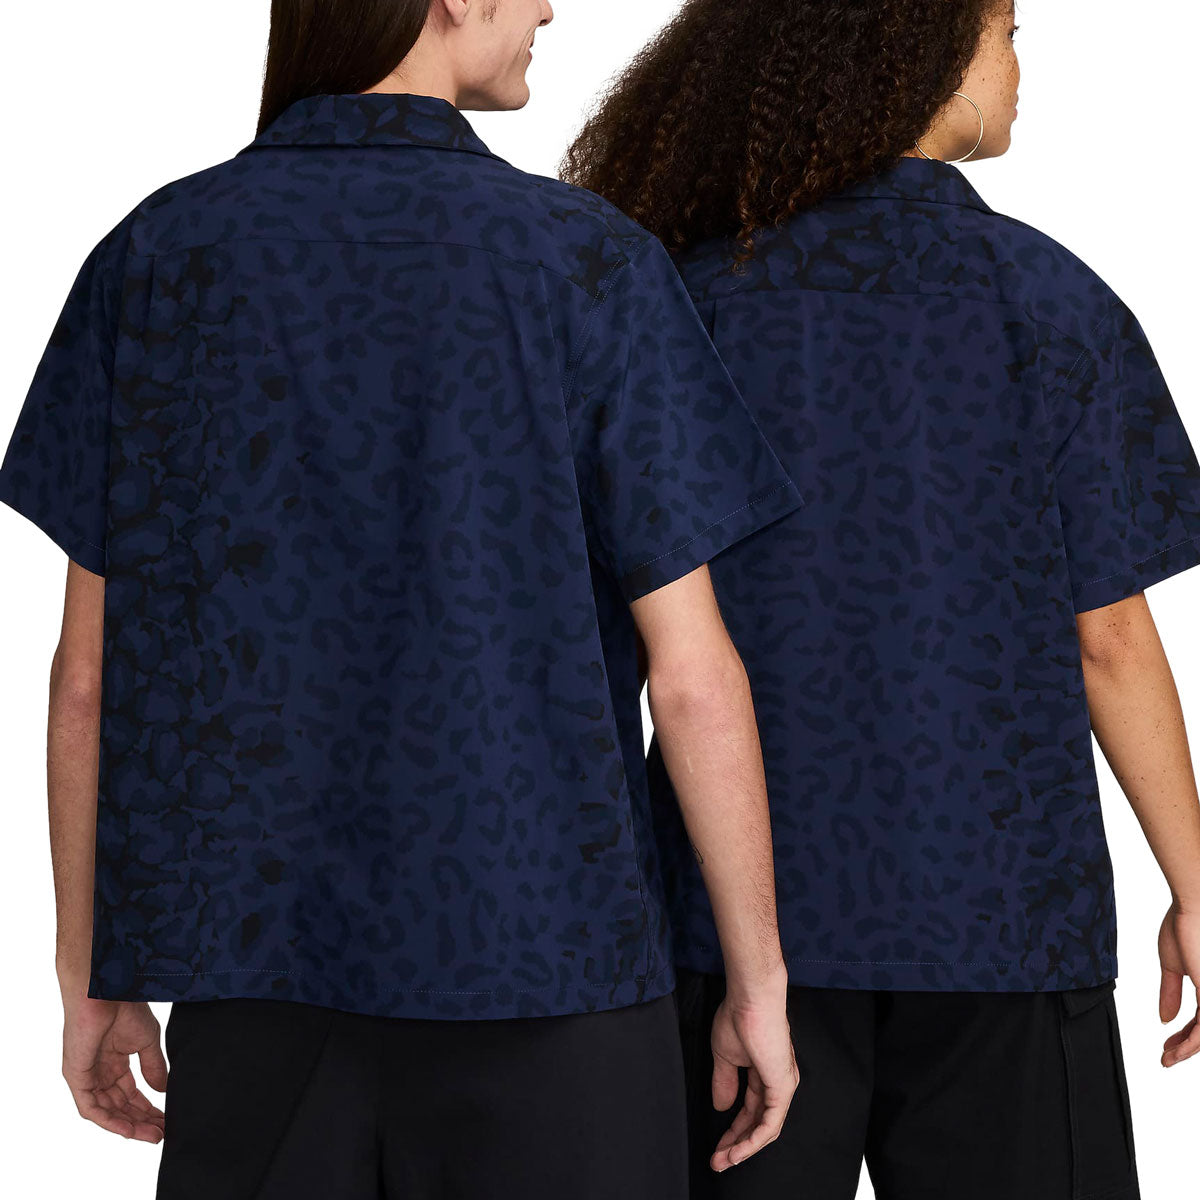 Nike SB Bowler Button Up Shirt - Midnight Navy image 3